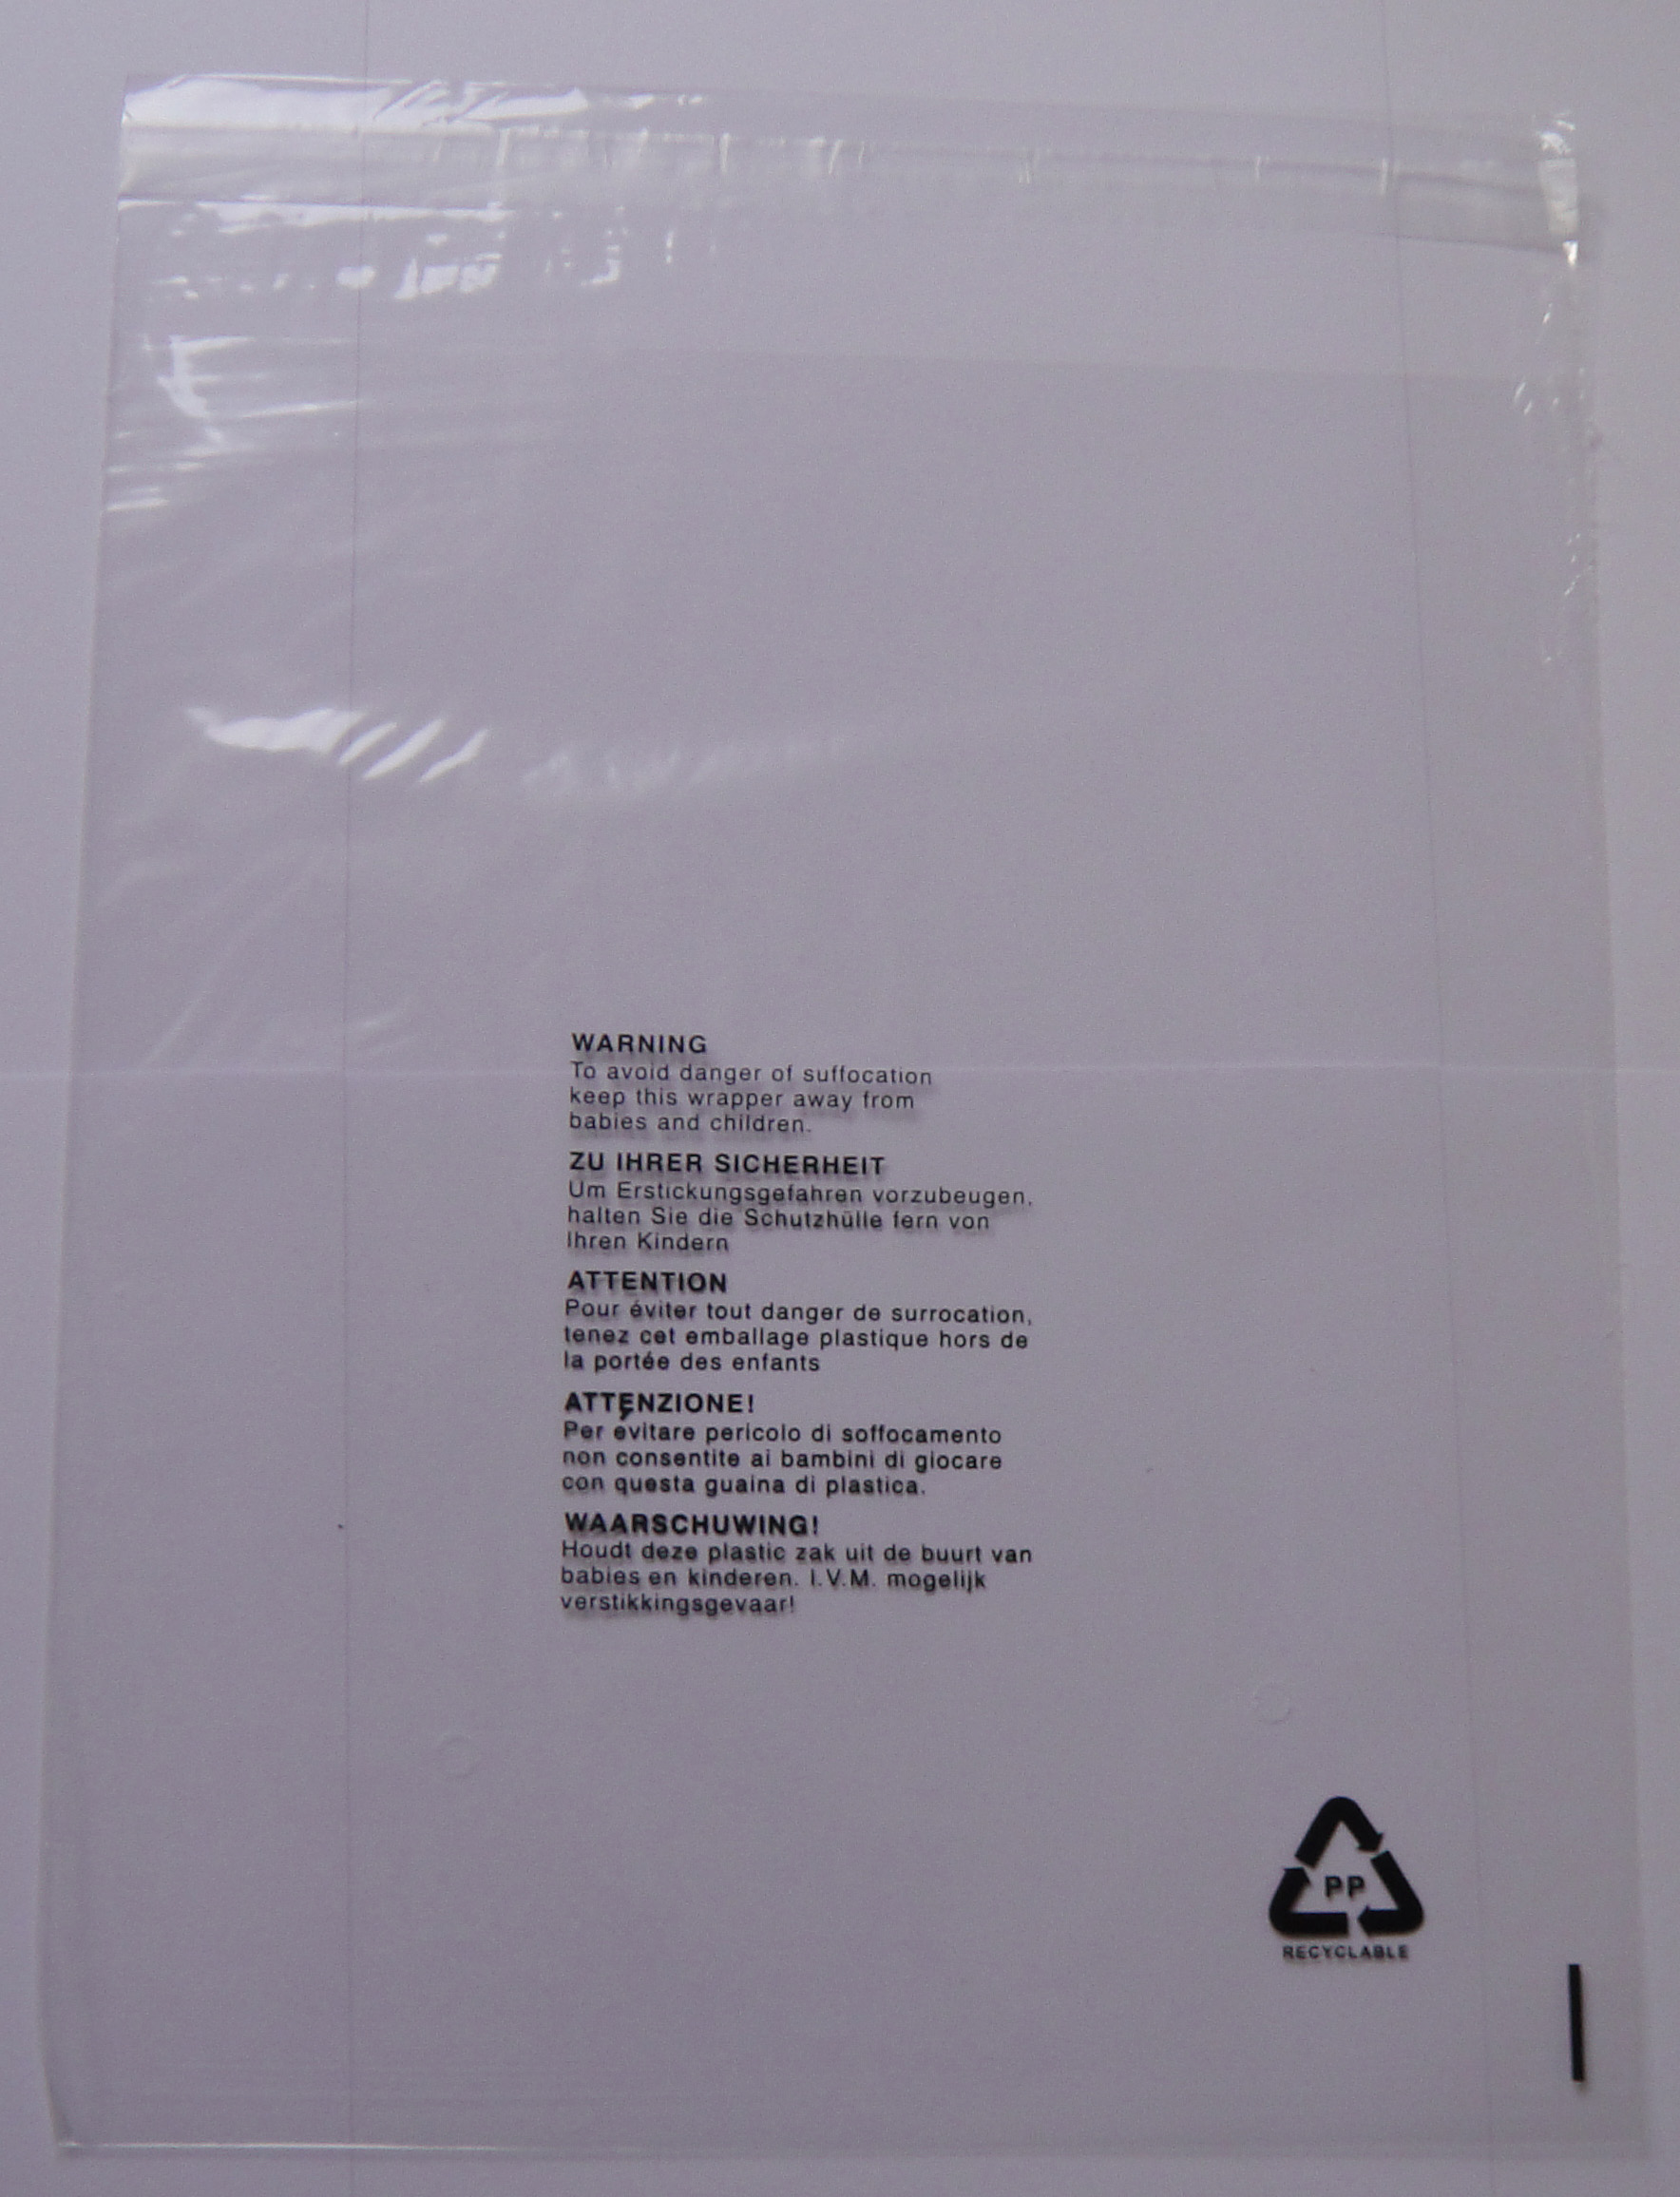 1000x Garment t-shirts Packing Polypropylene Resealable Bags Textile/Clothing 